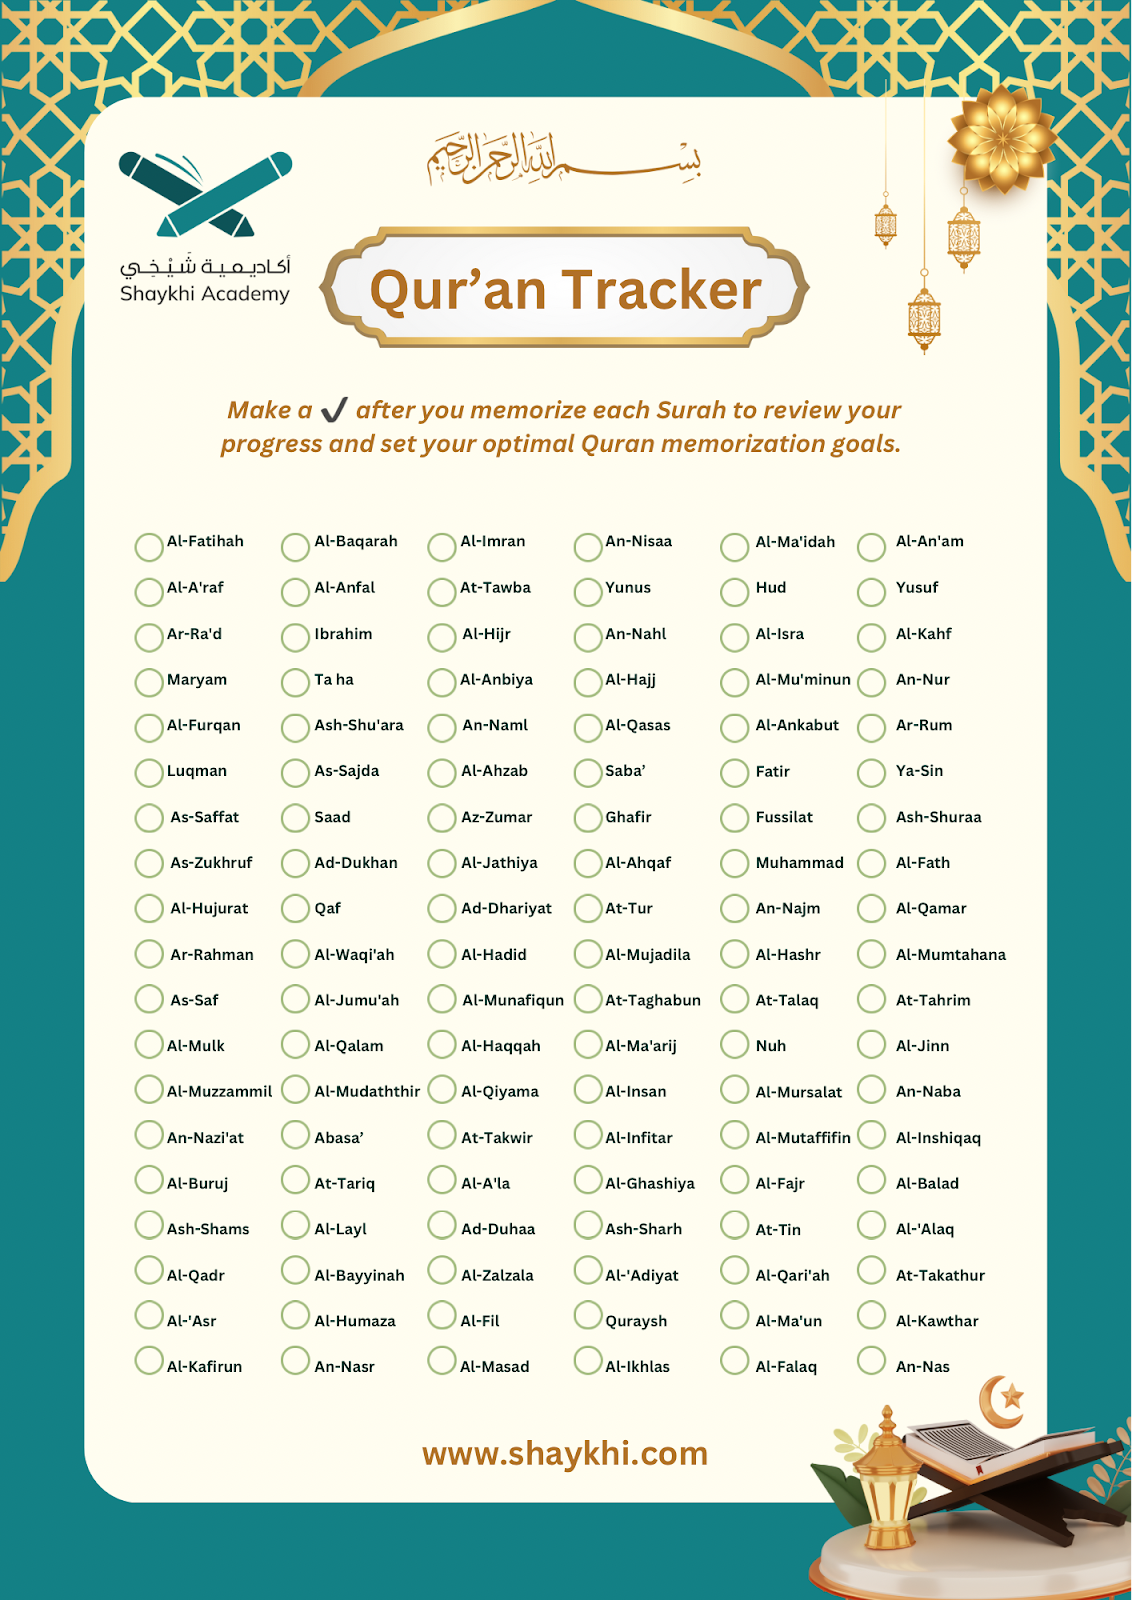 Quran memorization planners